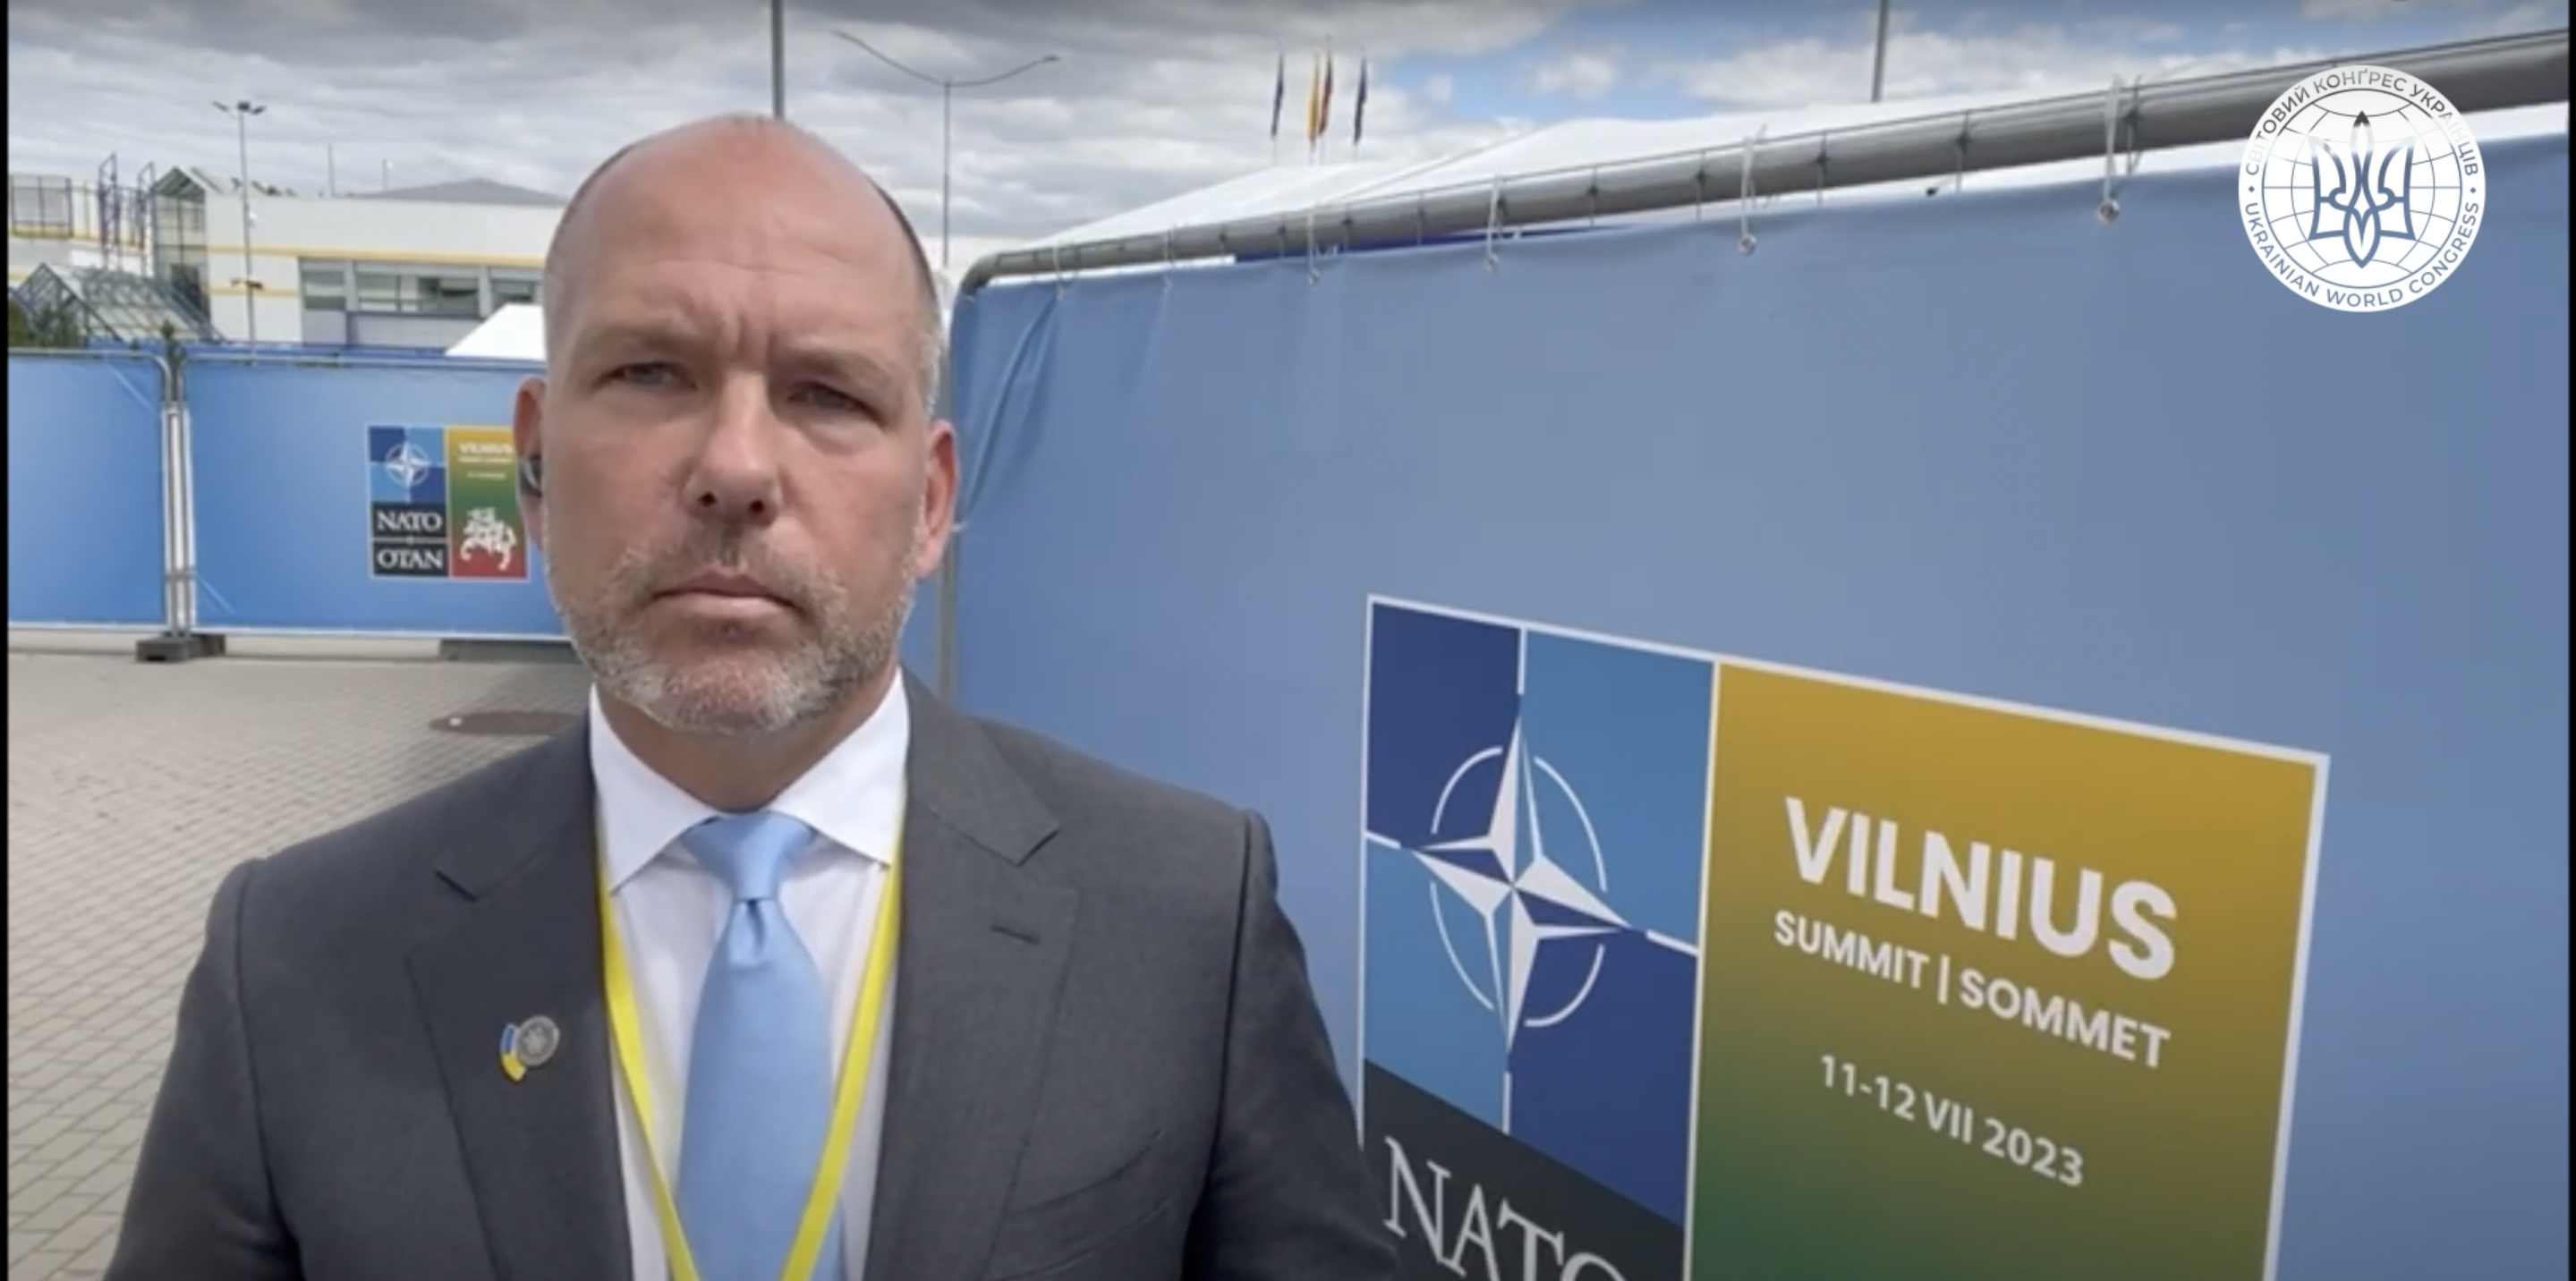 Summary of UWC efforts on NATO Summit sidelines